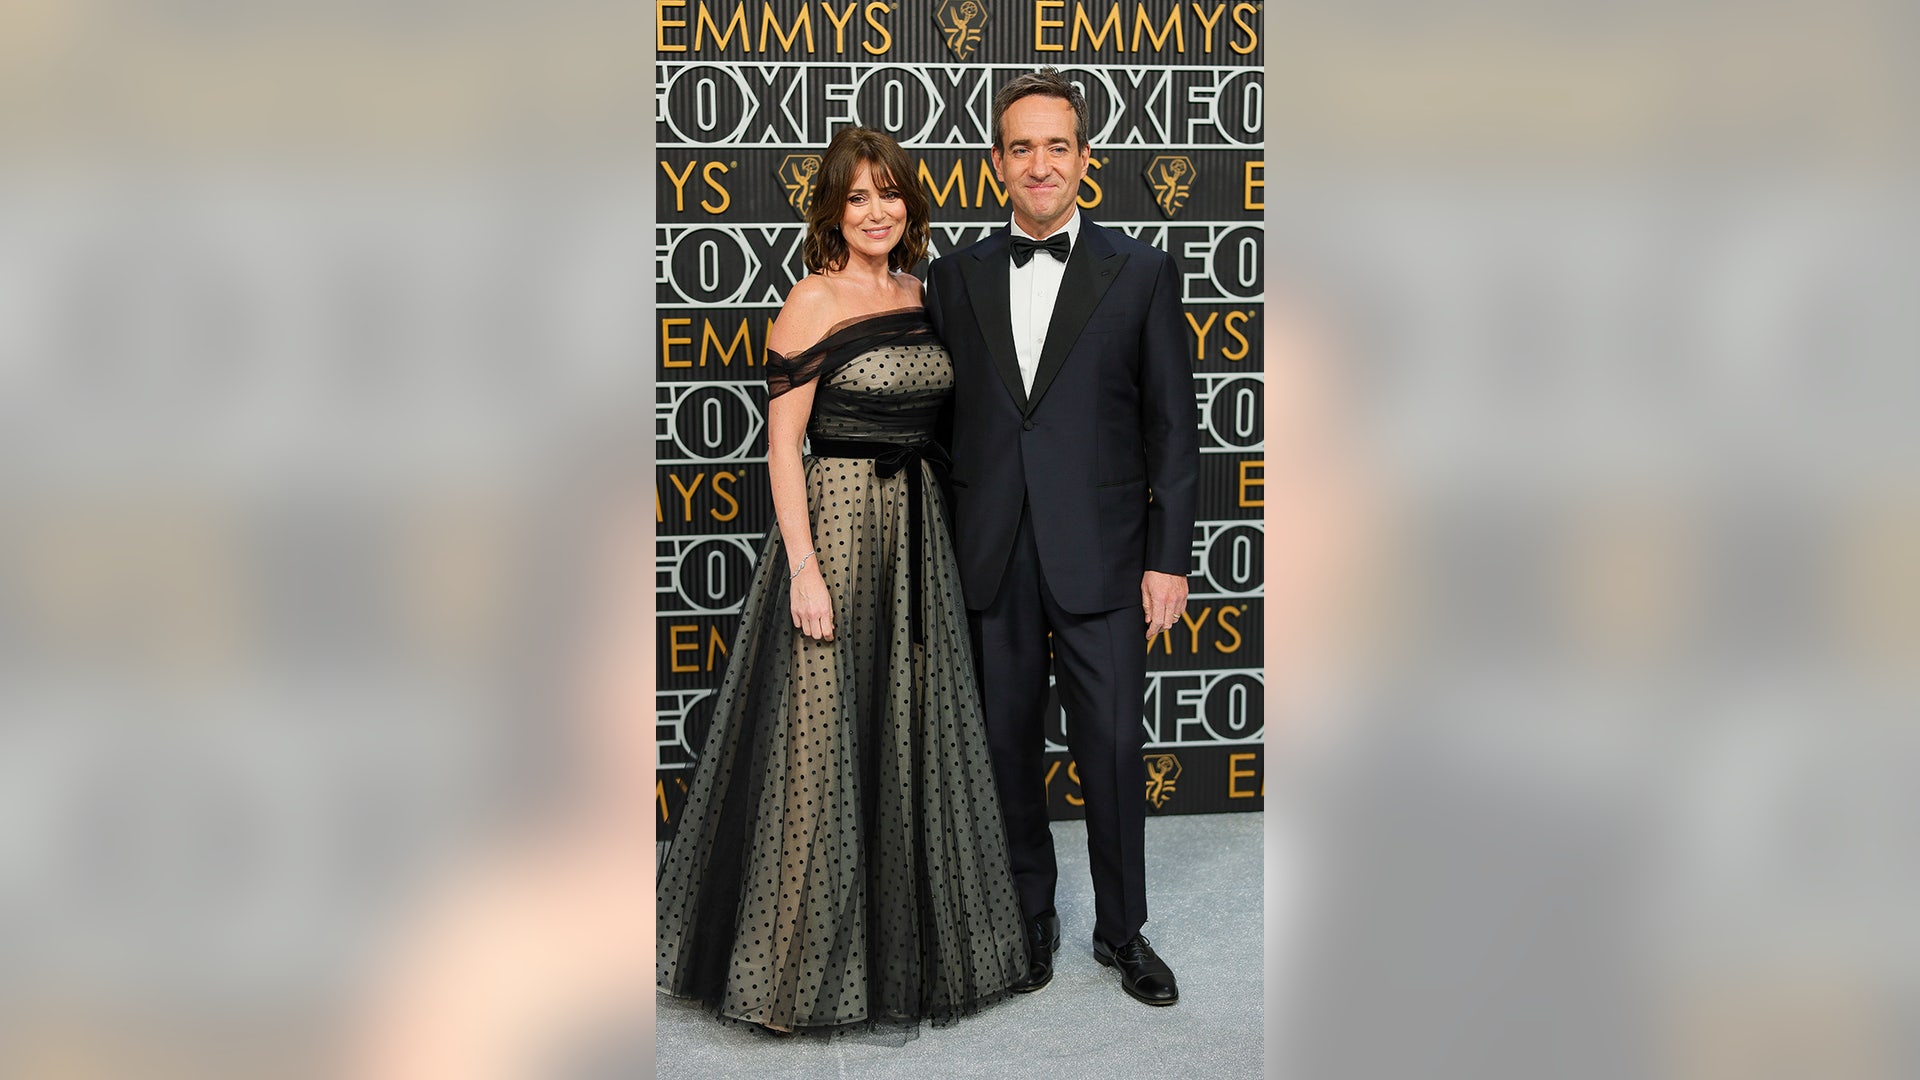 75th Emmy Awards red carpet: PHOTOS | Fox News